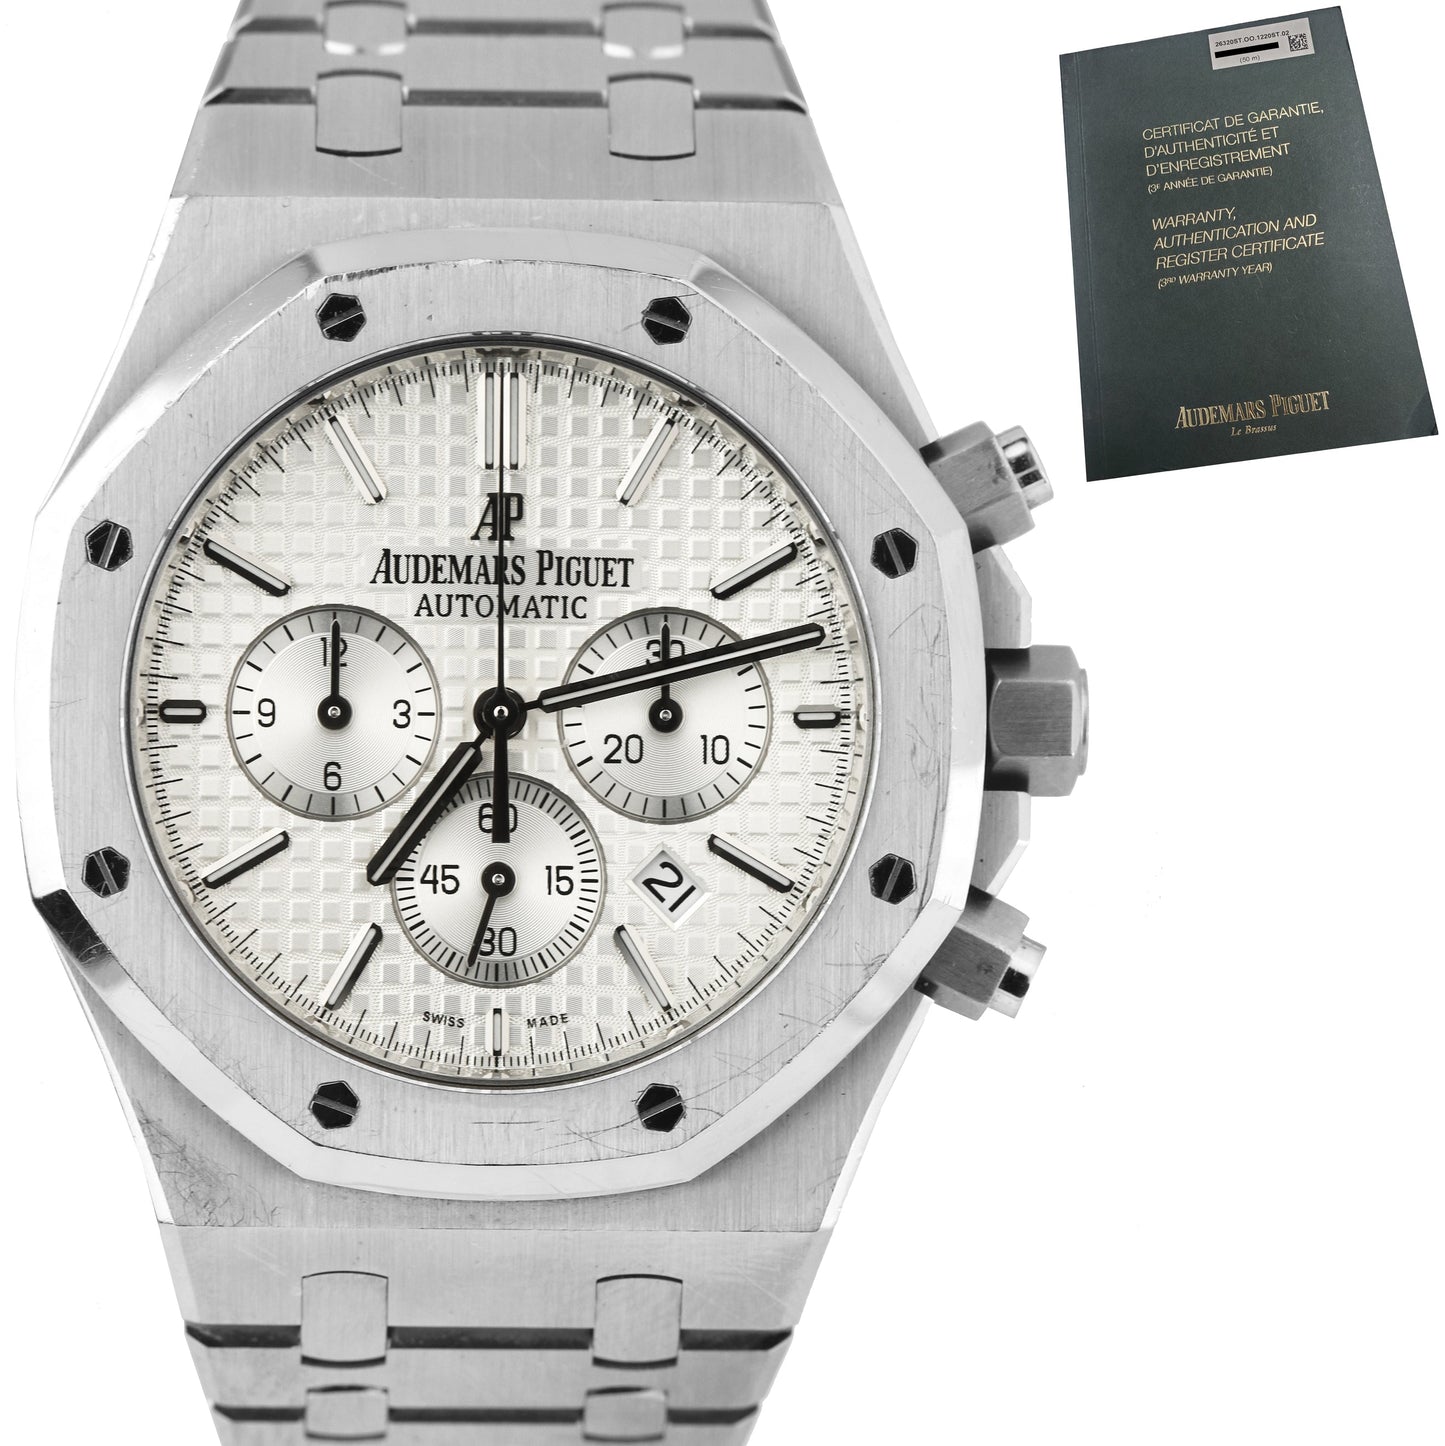 2016 Audemars Piguet Royal Oak 41mm Chronograph White Watch 26320ST.OO.1220ST.02